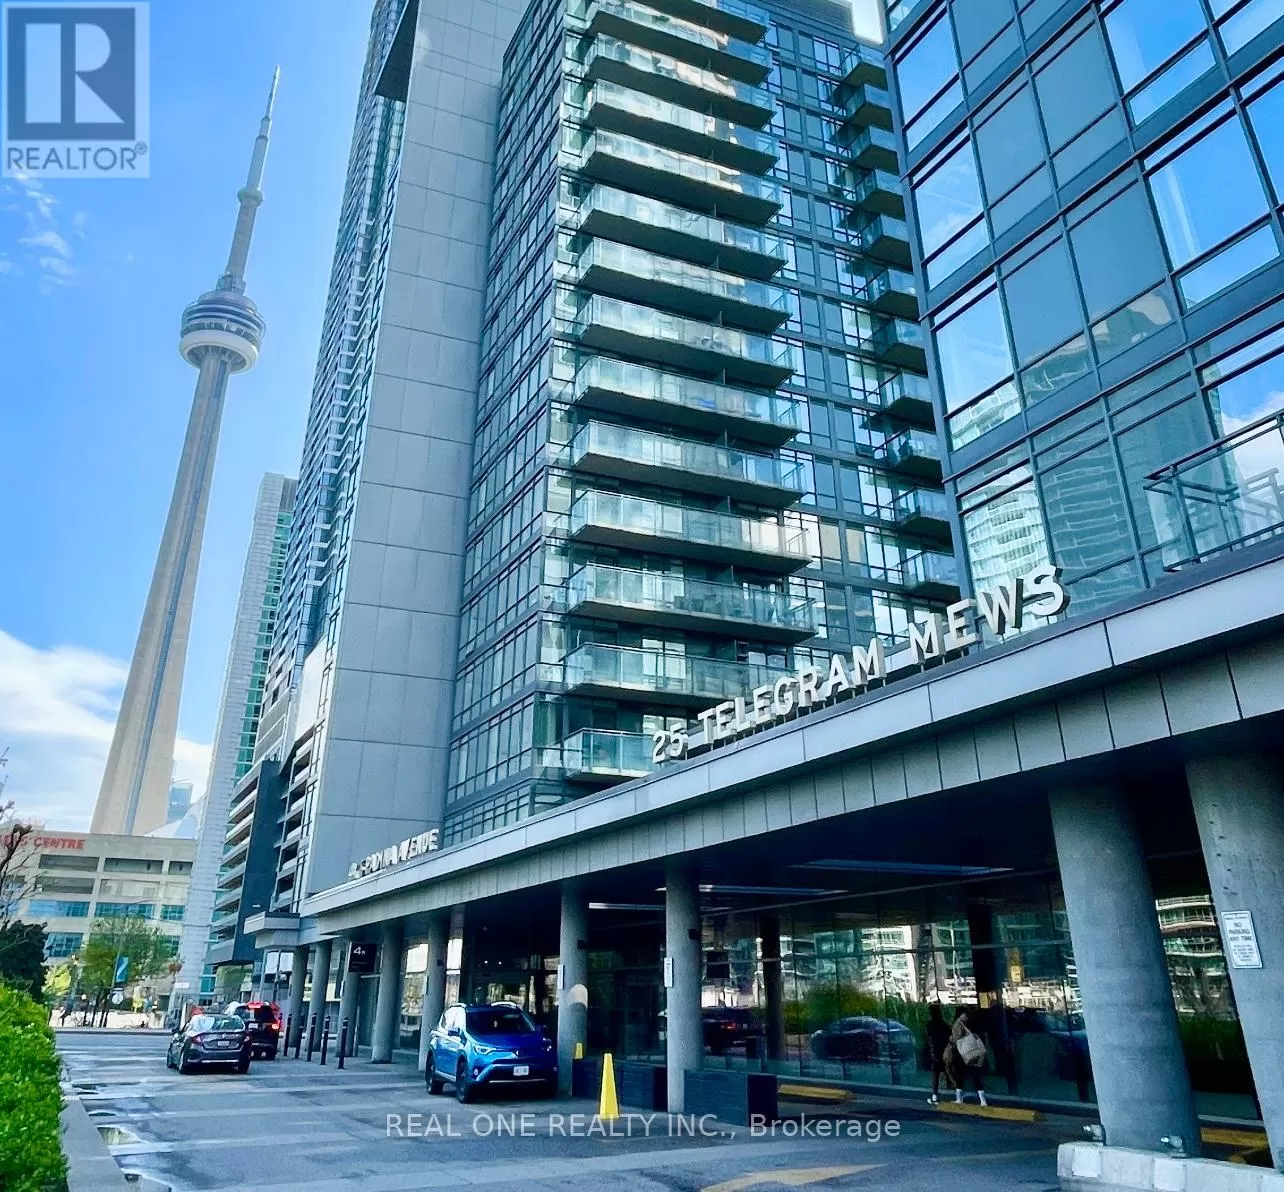 Apartment for rent: 2816 - 25 Telegram Mews, Toronto, Ontario M5V 3Z9